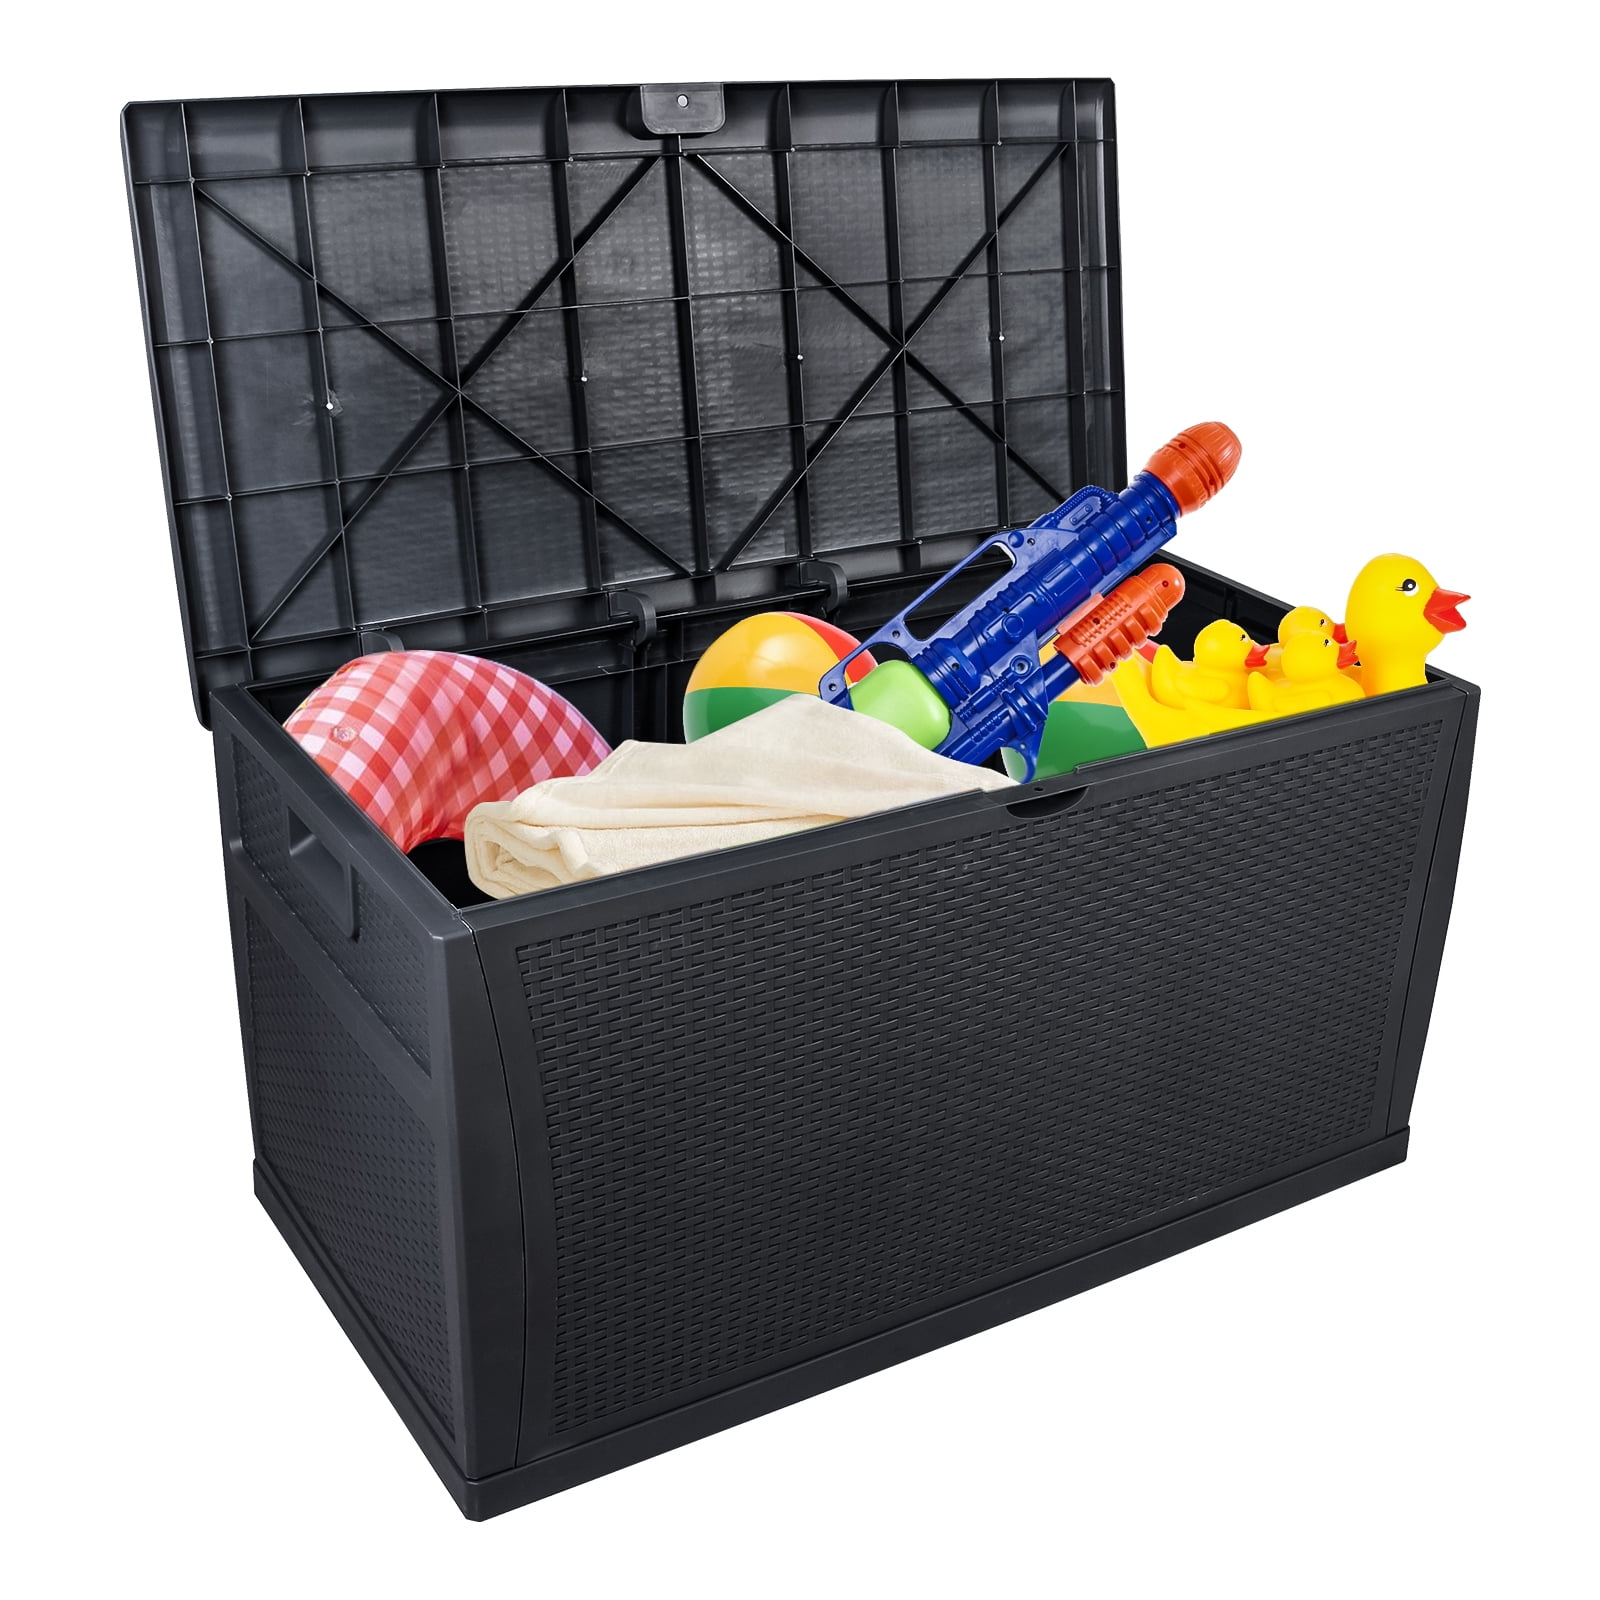 Sesslife 120 Gallon Deck Box, Organization and Storage Box for